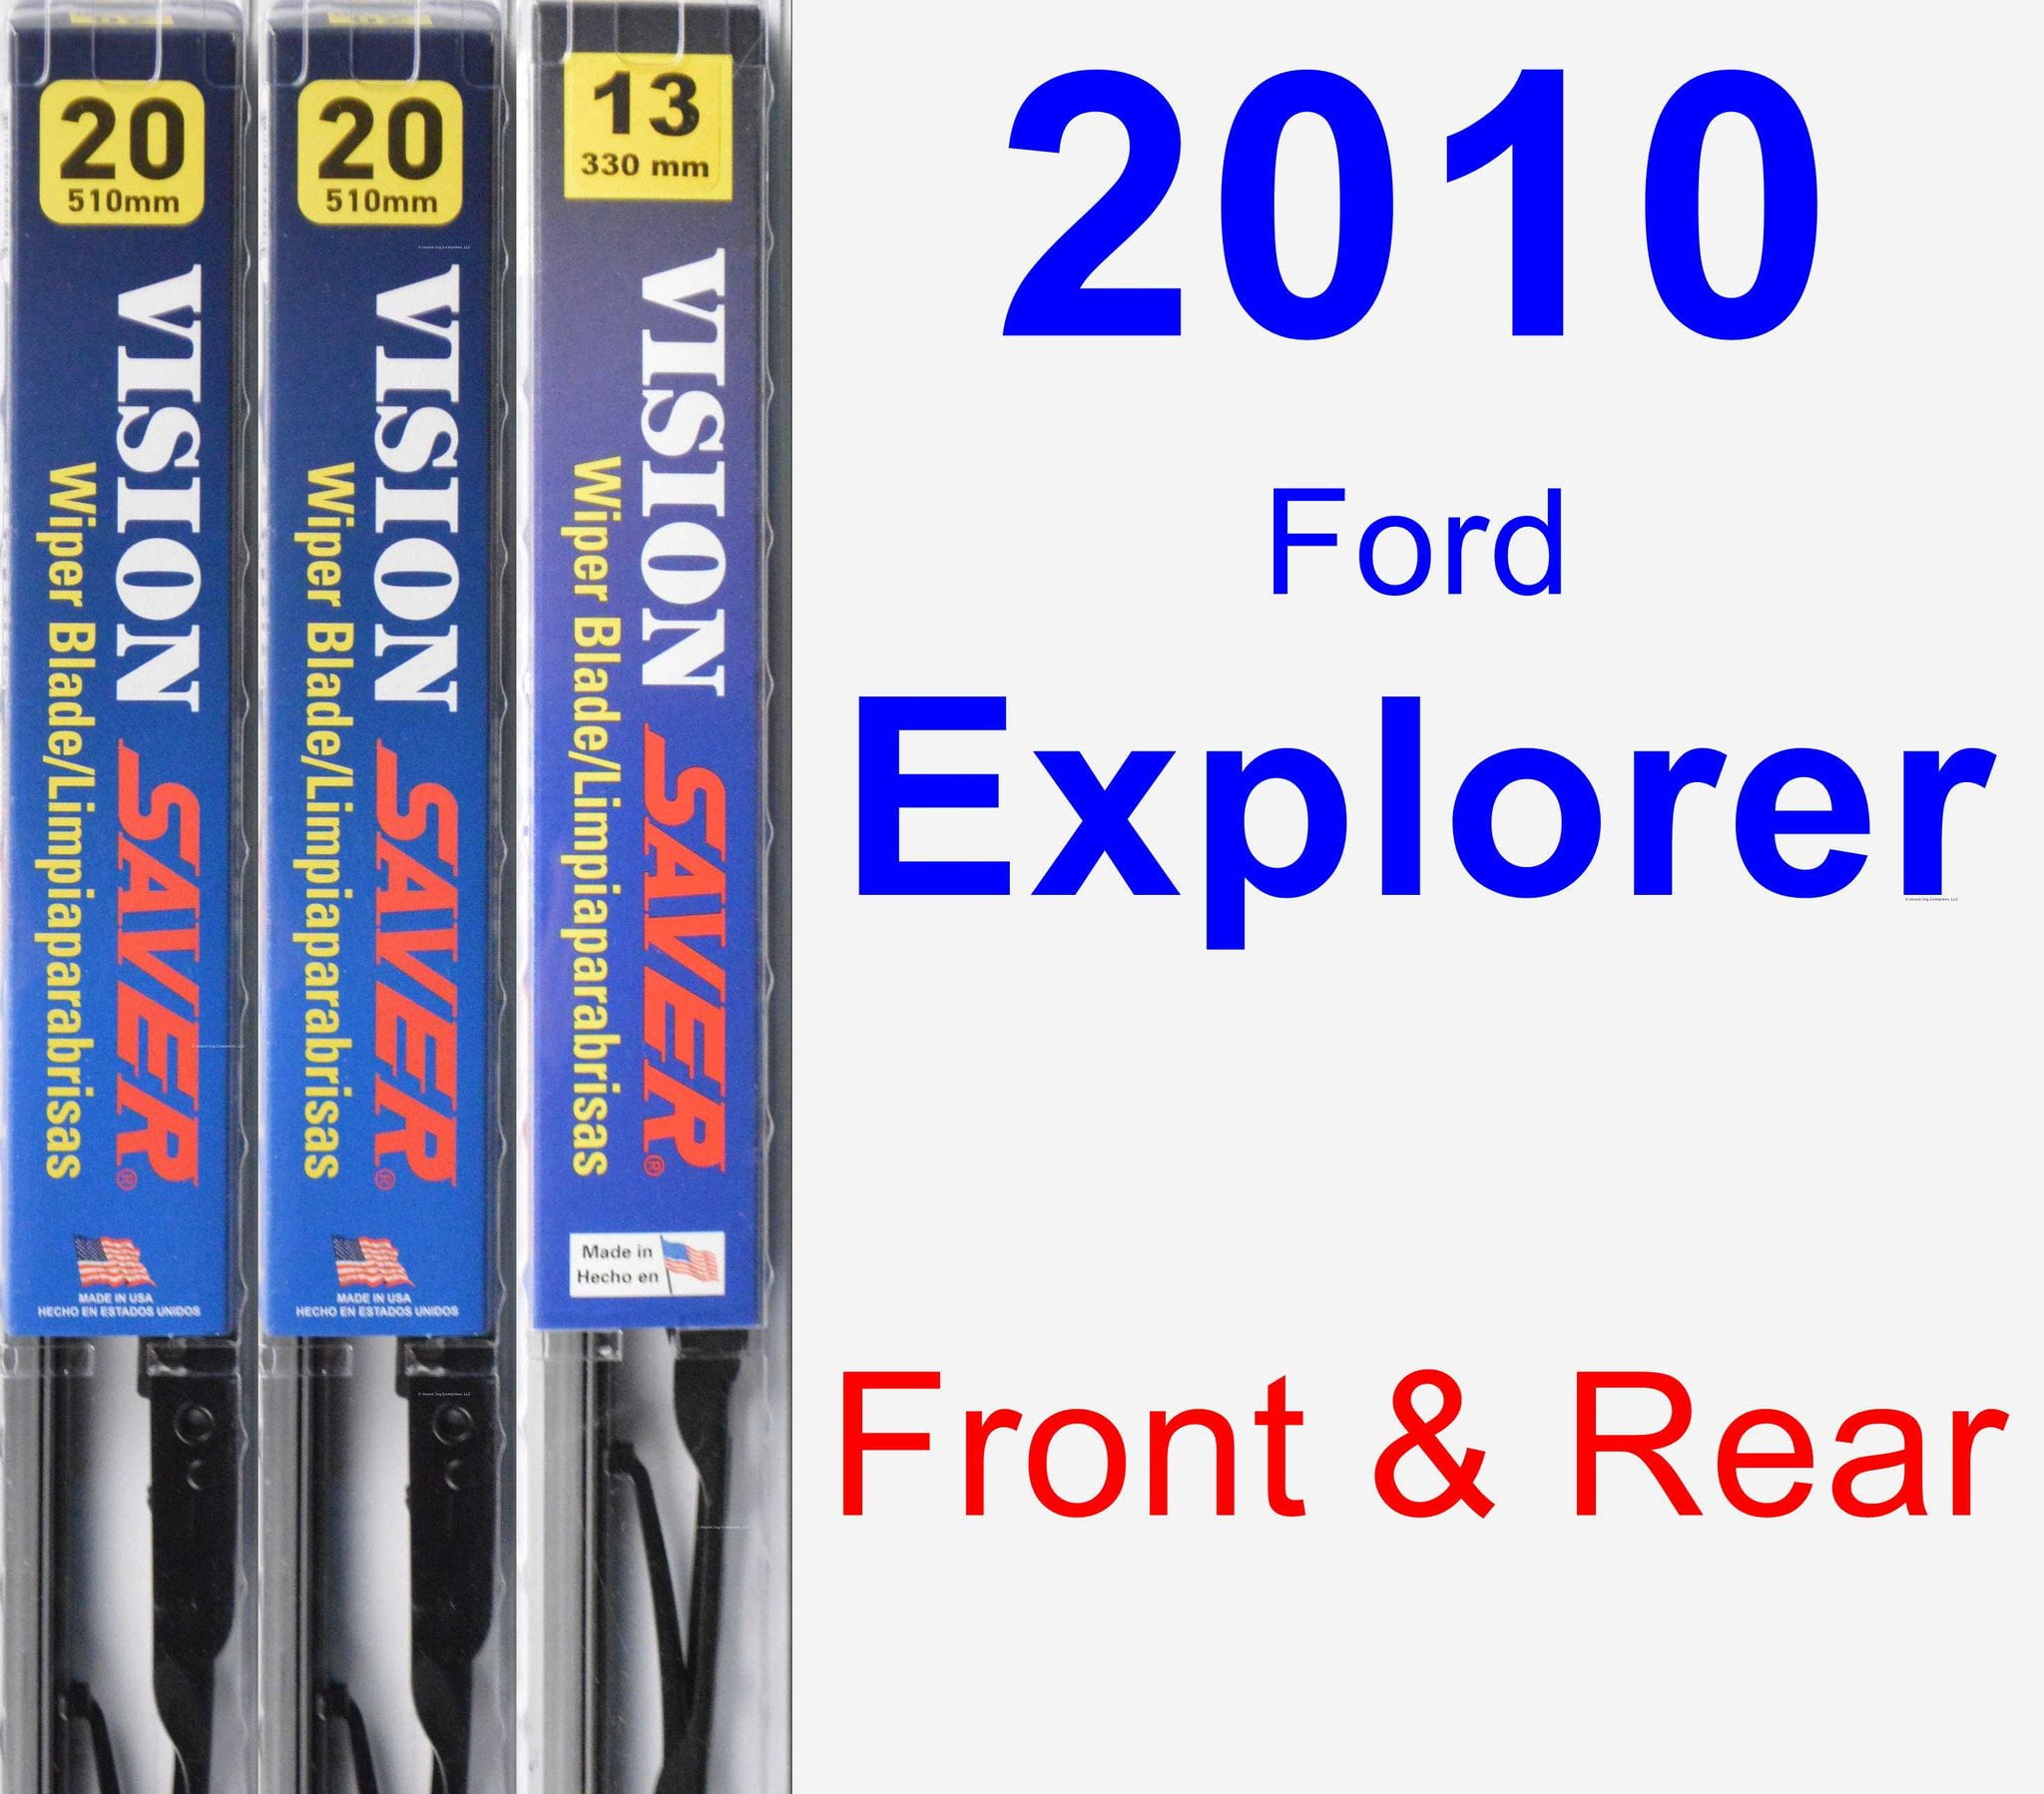 2010 Ford Explorer Wiper Blade Set/Kit (Front & Rear) (3 Blades) - Vision Saver - Walmart.com 2010 Ford Explorer Rear Wiper Blade Size